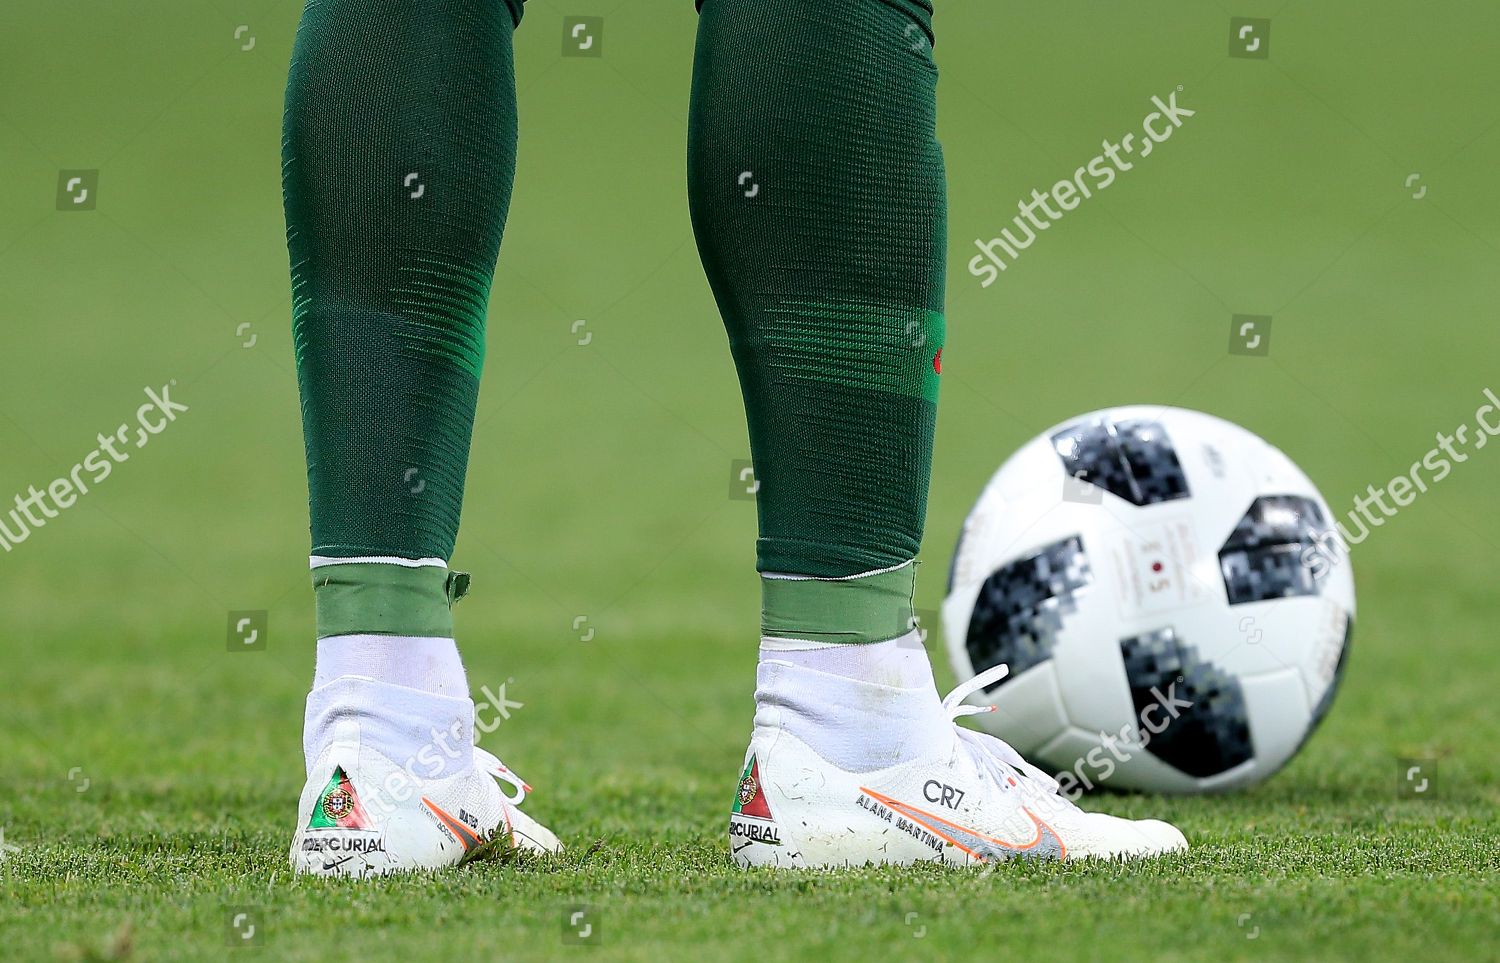 Nike Mercurial Football Boots Cristiano Ronaldo Foto de stock de contenido - Imagen de stock | Shutterstock